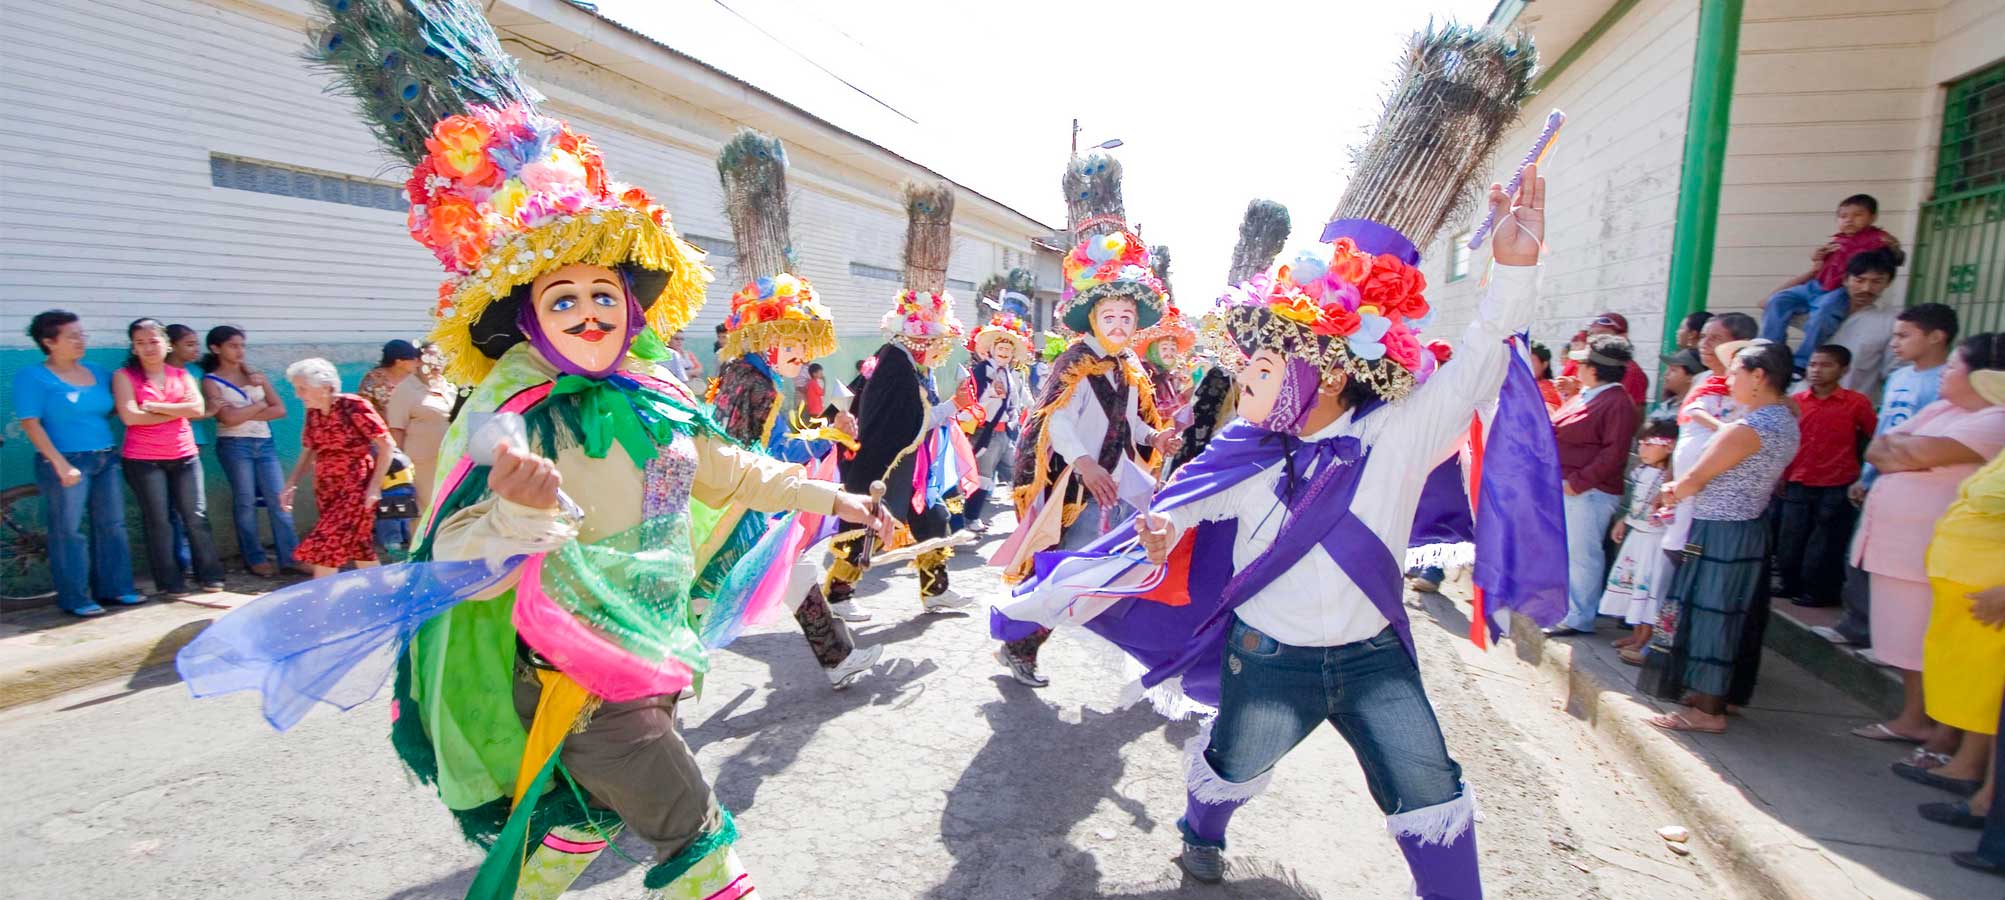 Events and Fiestas Nicaragua Tourism